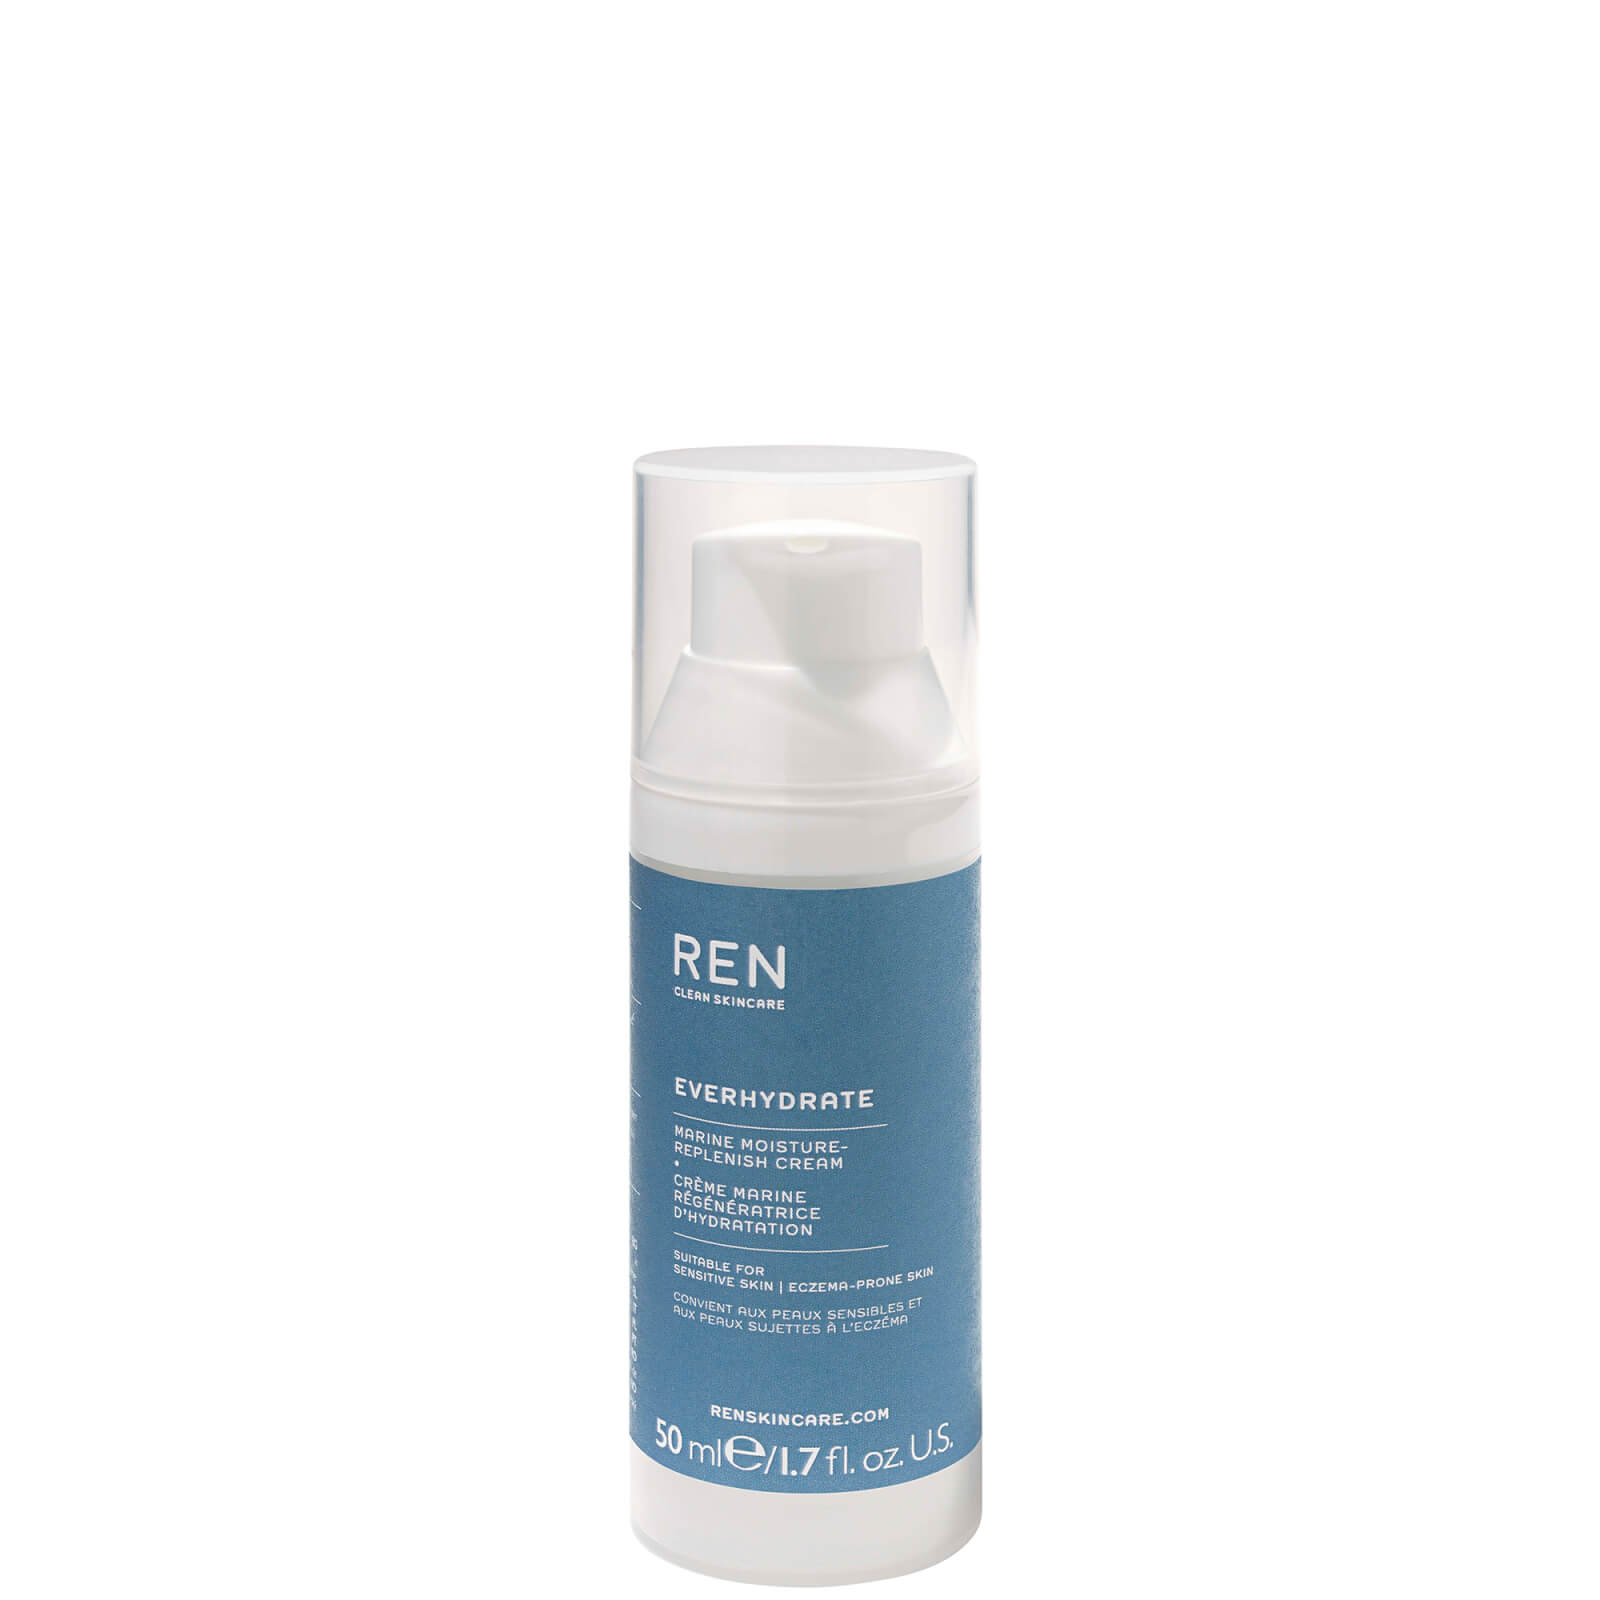 Ren Clean Skincare Everhydrate Marine Moisture-replenish Cream 50ml In White